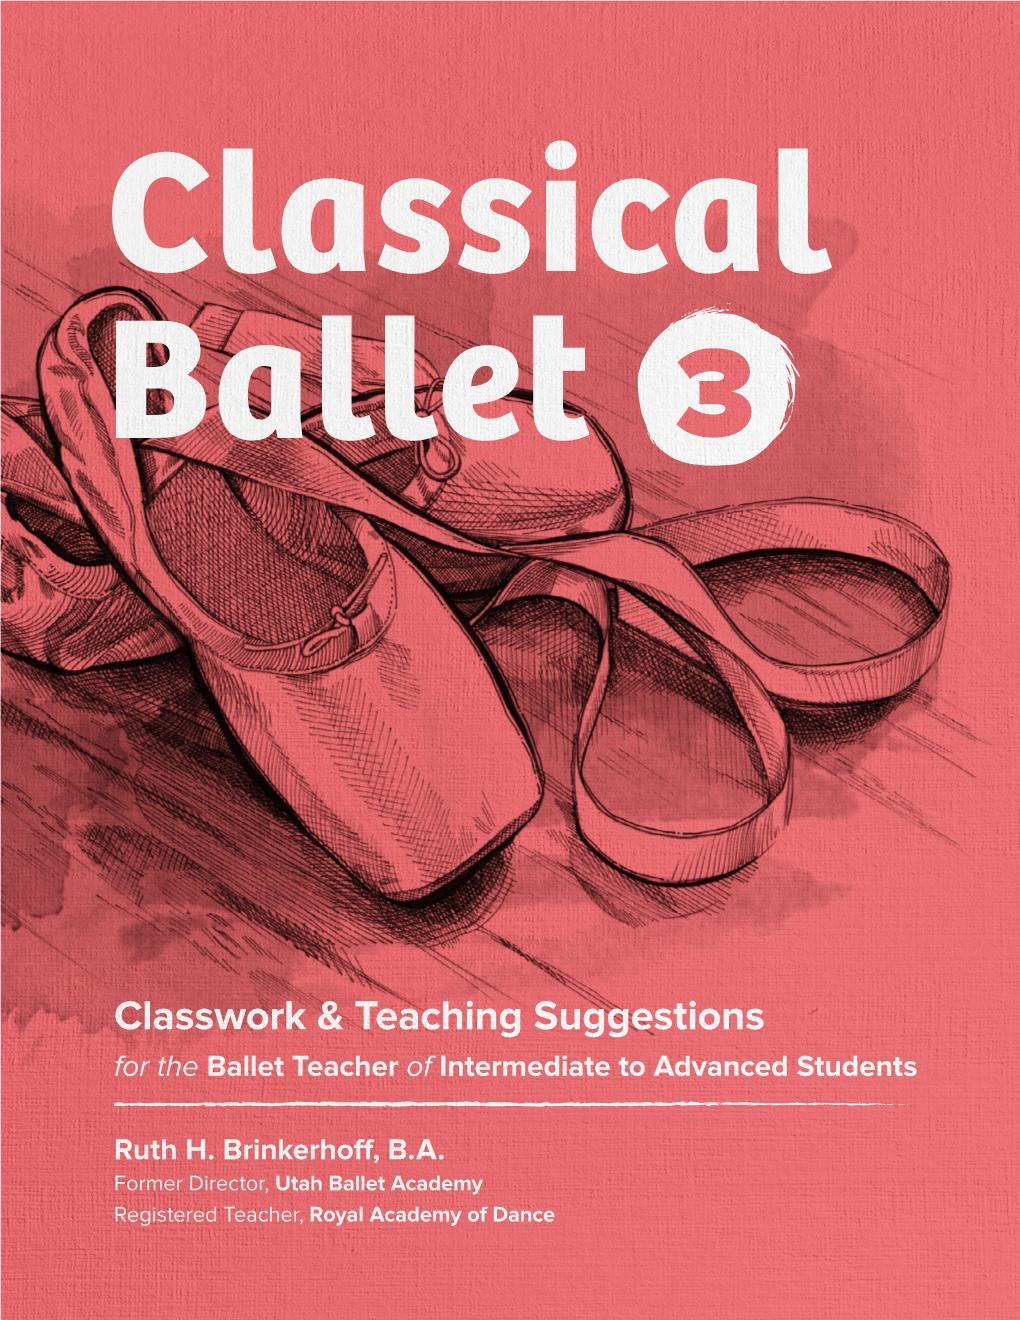 Classical Ballet Classwork & Teaching Suggestions